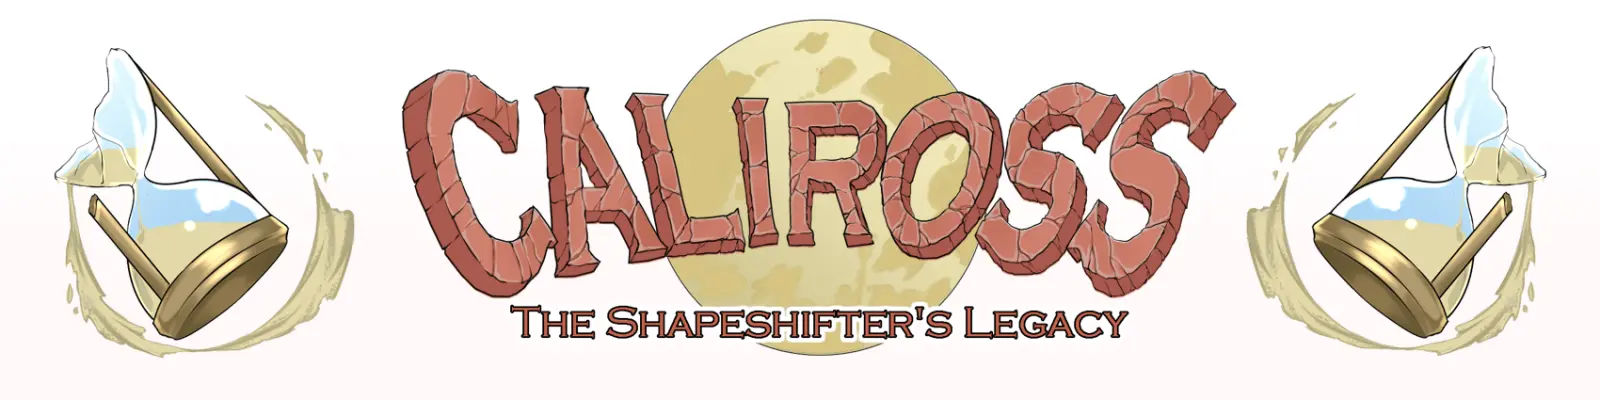 Caliross, the Shapeshifter's Legacy main image